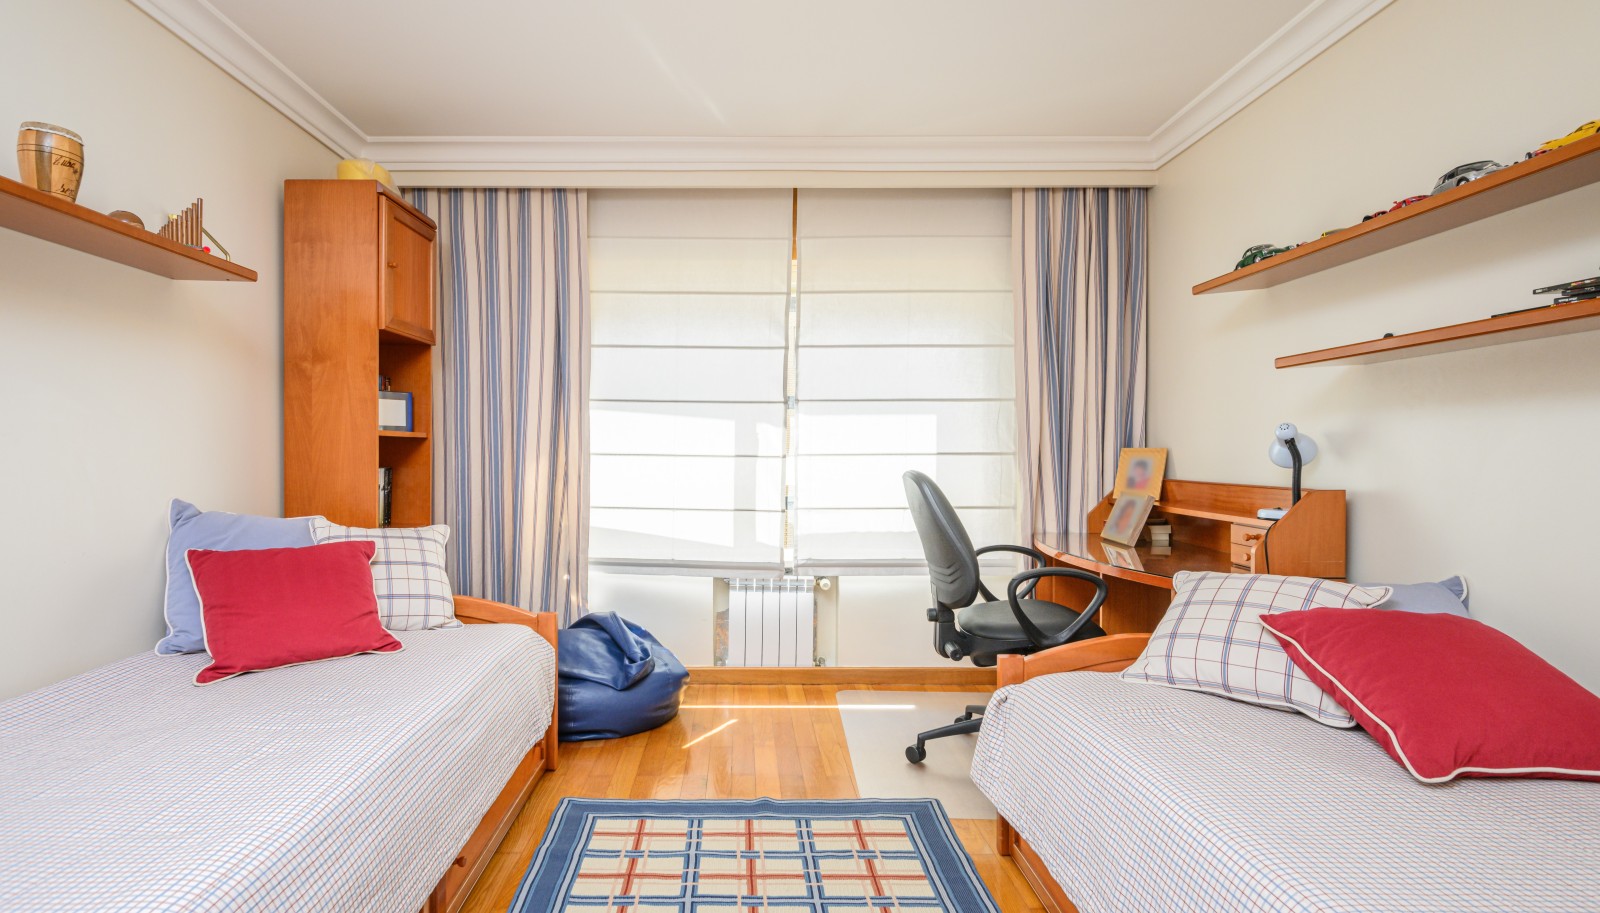 Appartement de 5 chambres avec balcon, à vendre, à V. N. Gaia, Porto, Portugal_236325